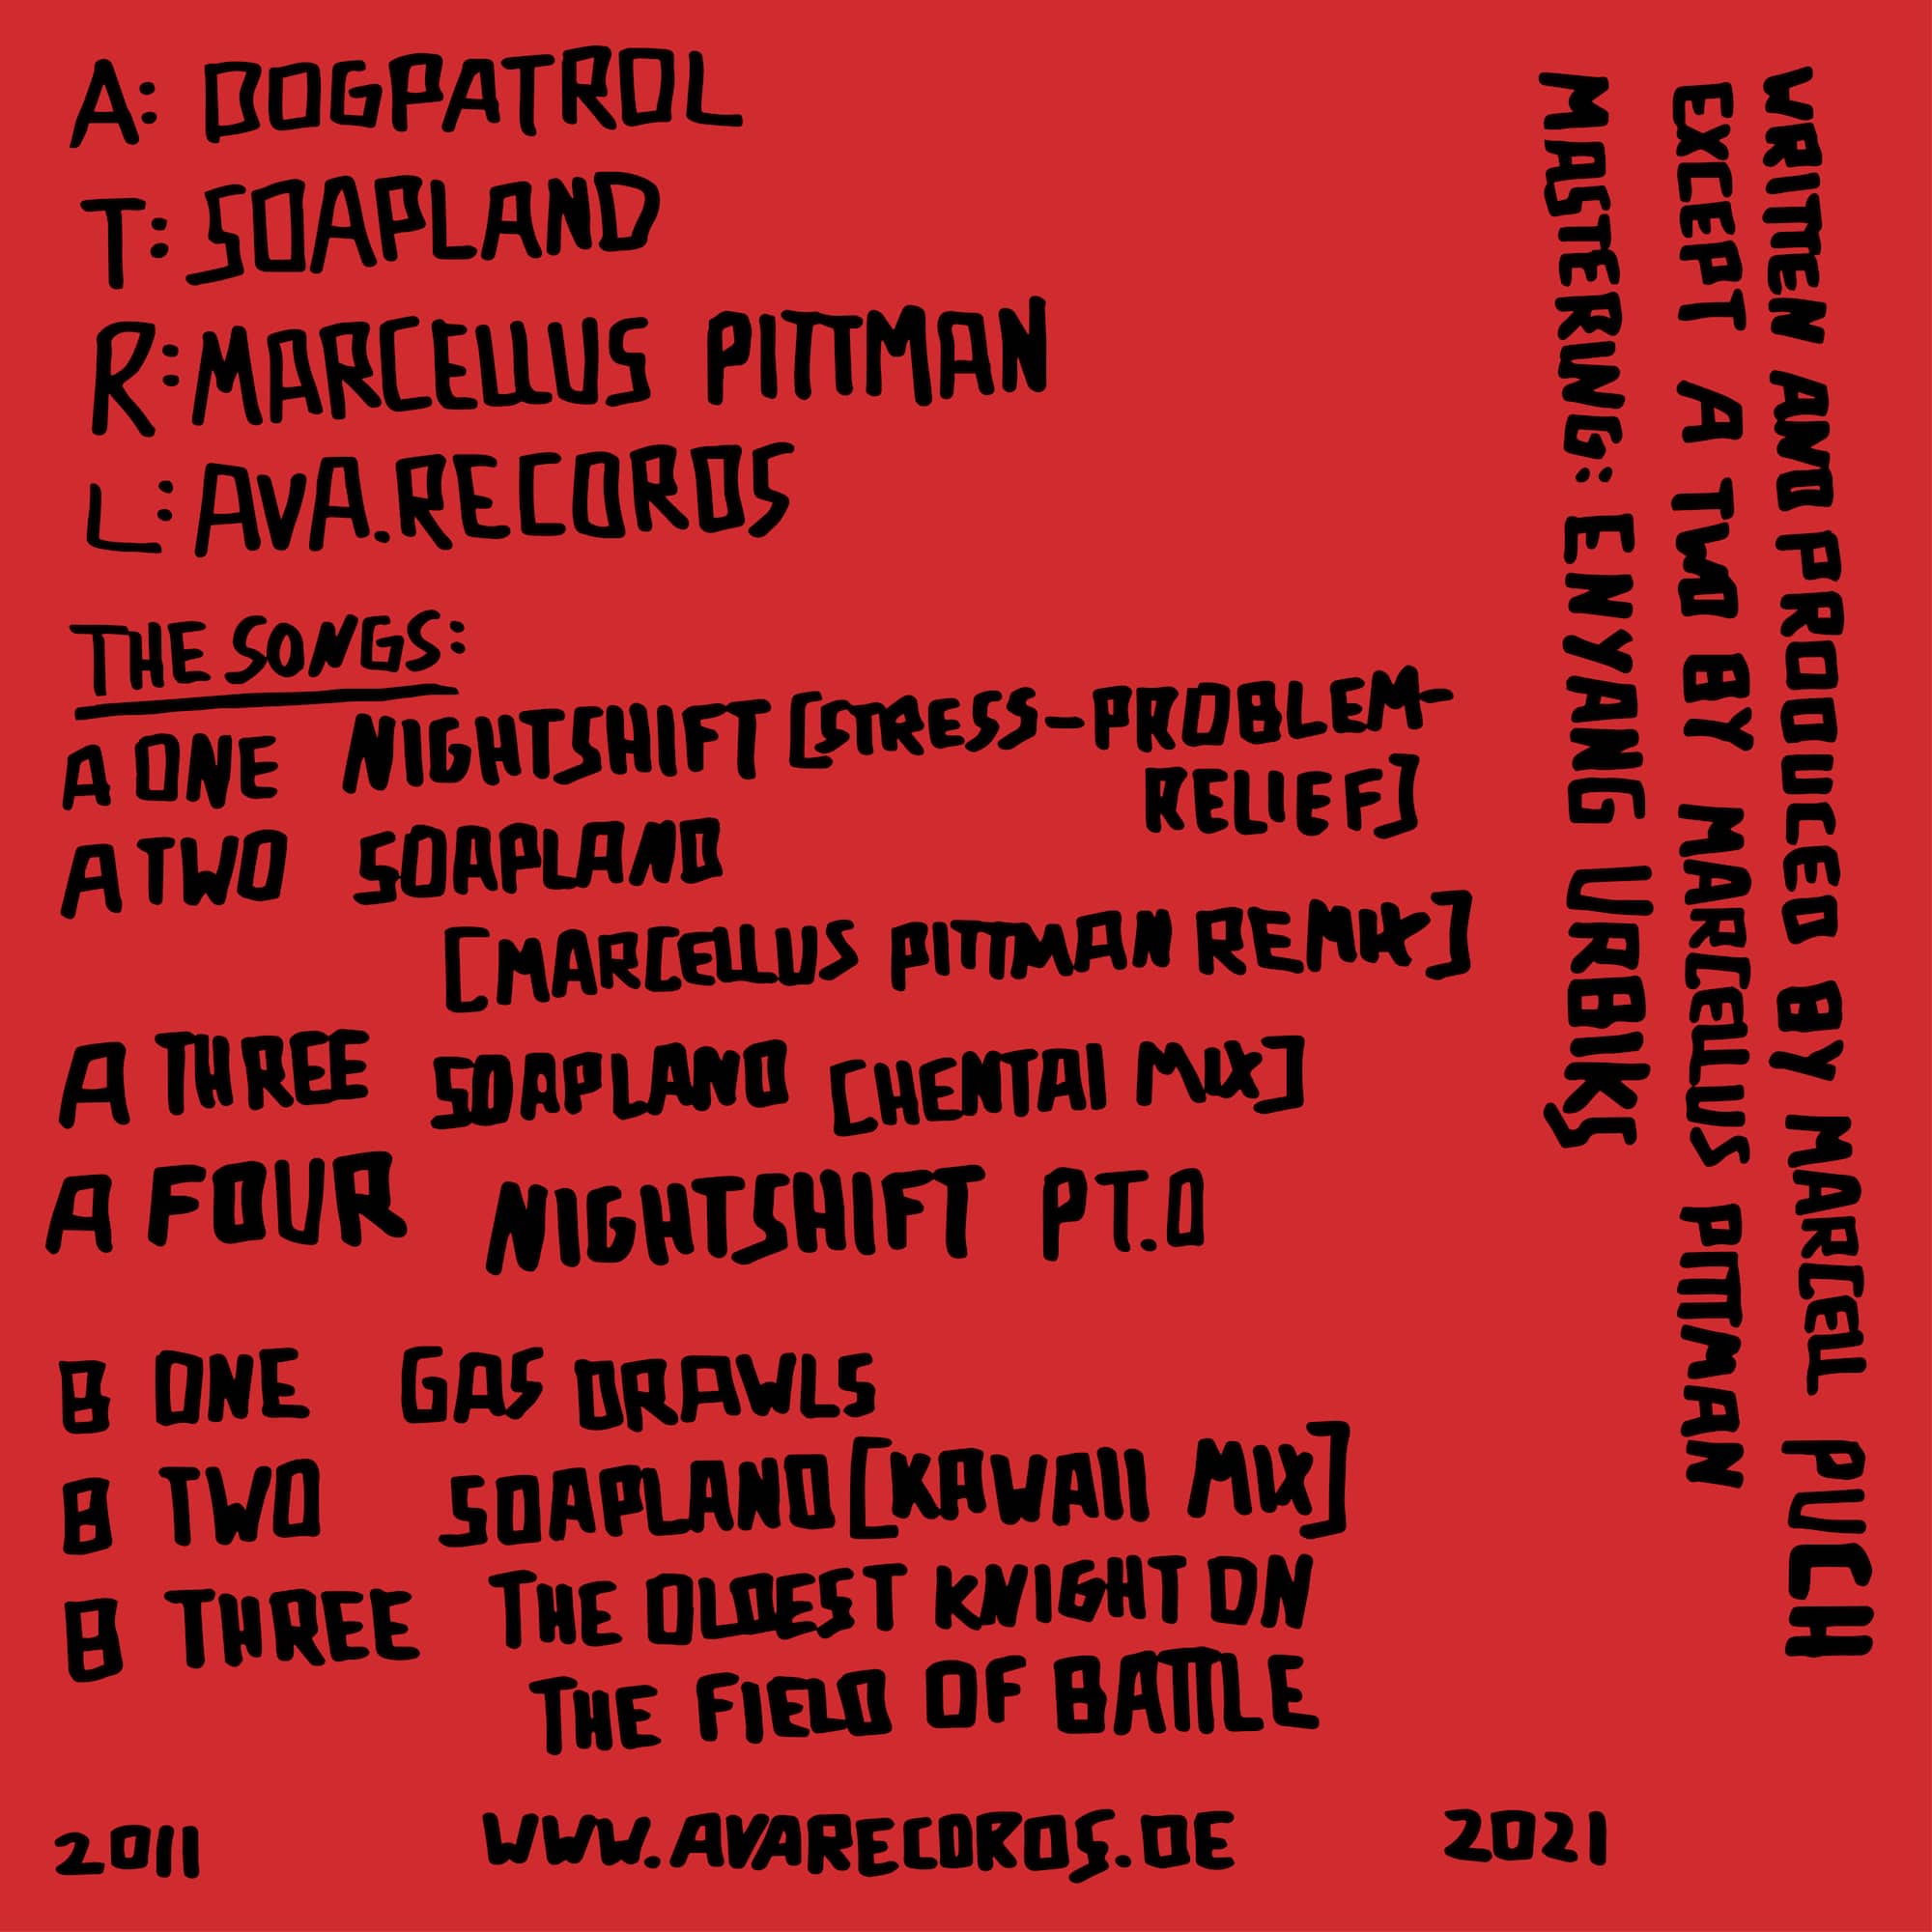 Dogpatrol - Soapland (Marcellus Pittman remix) - AVA019 - AVA RECORDS